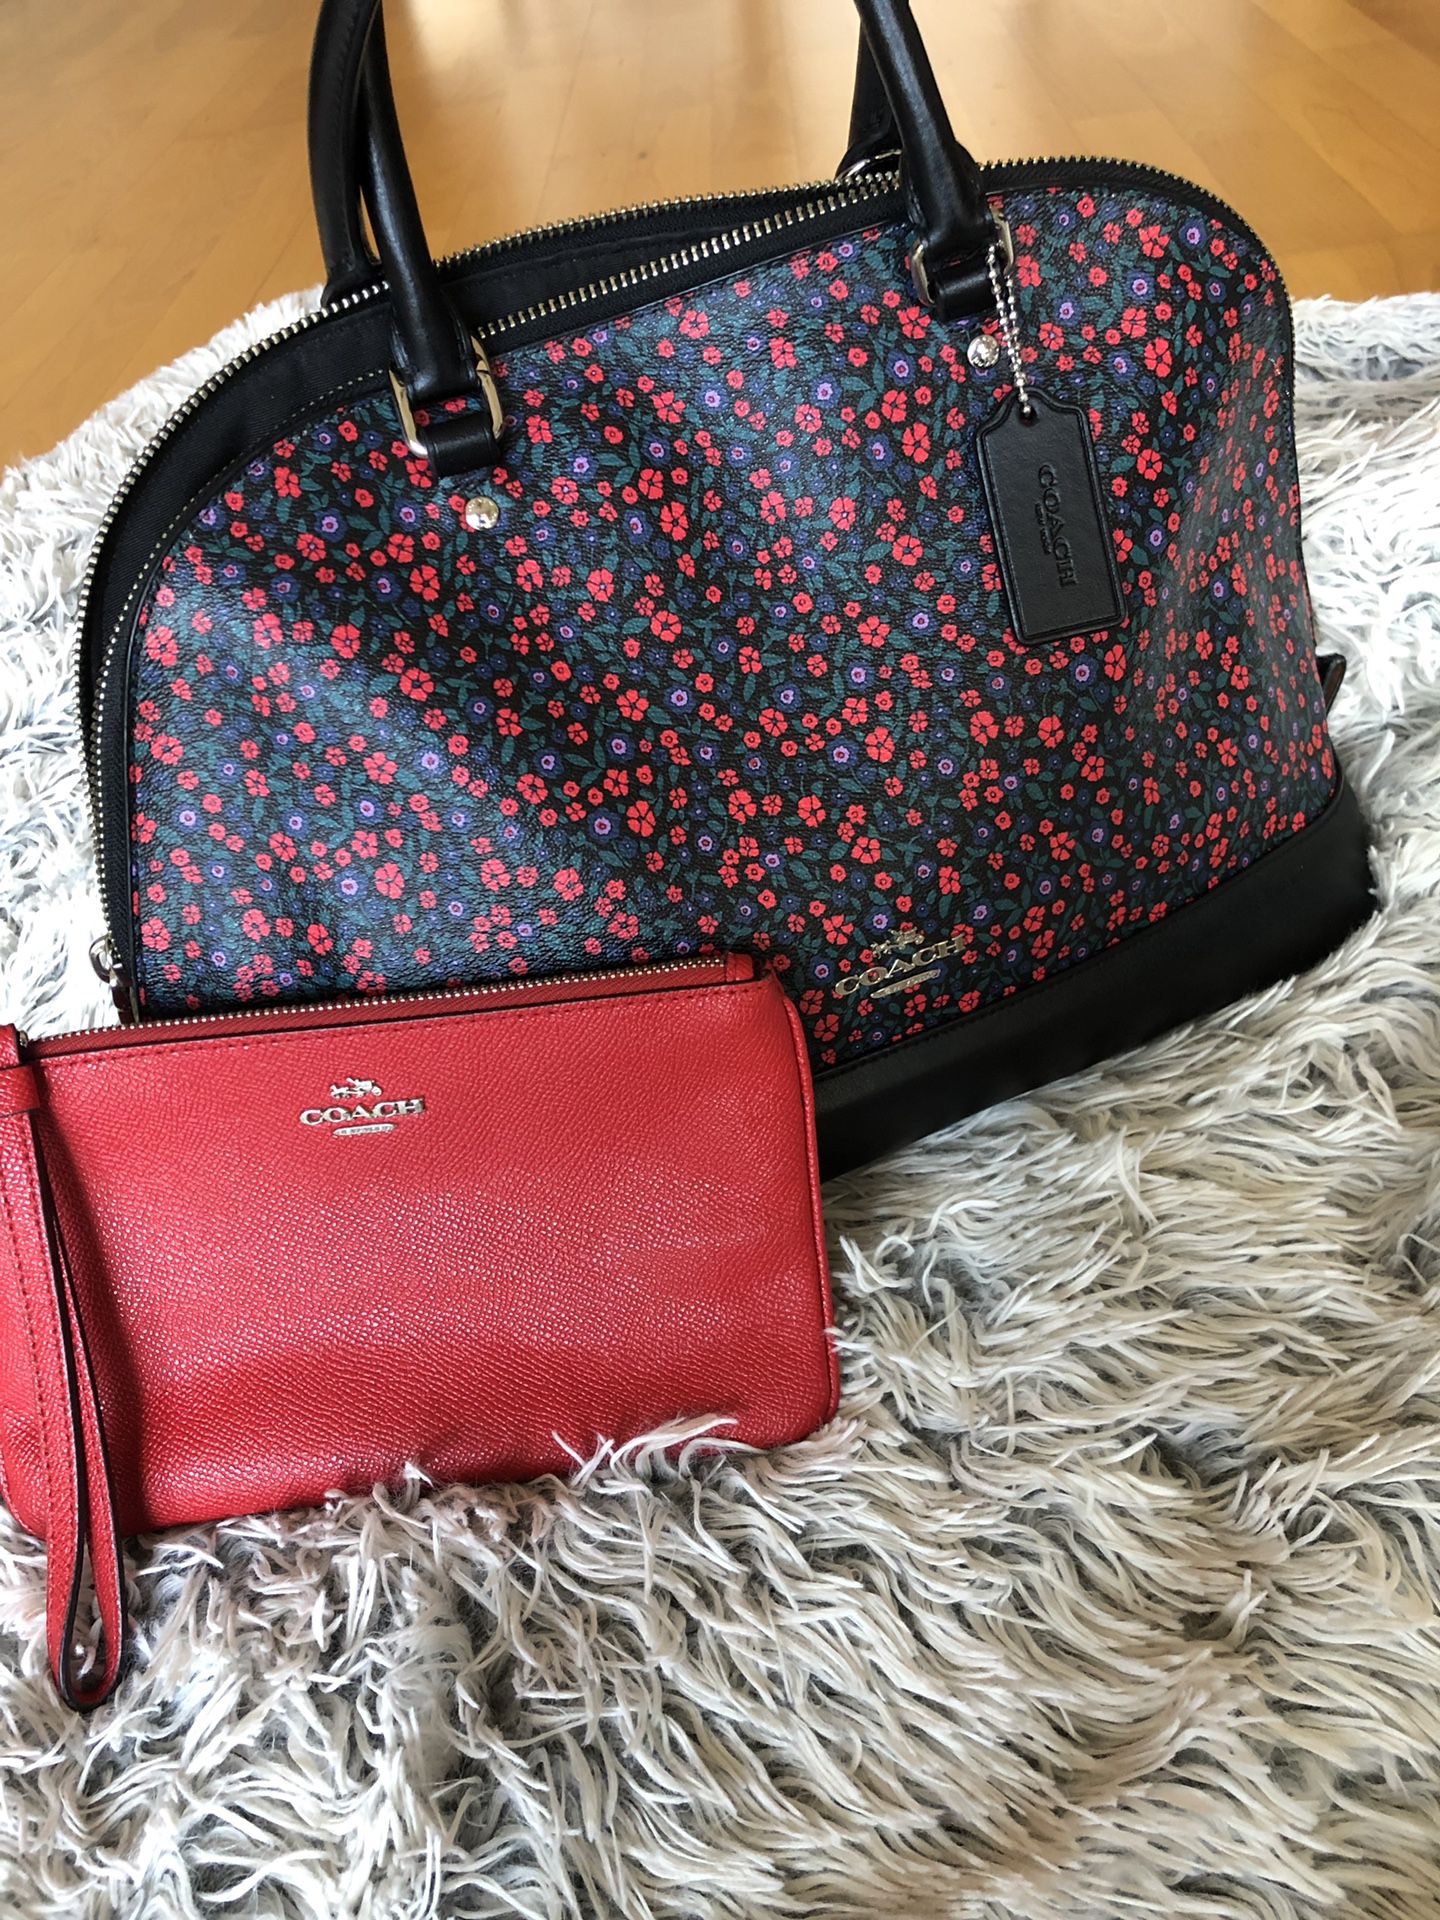 Red and black Floral Coach prairie tote bag